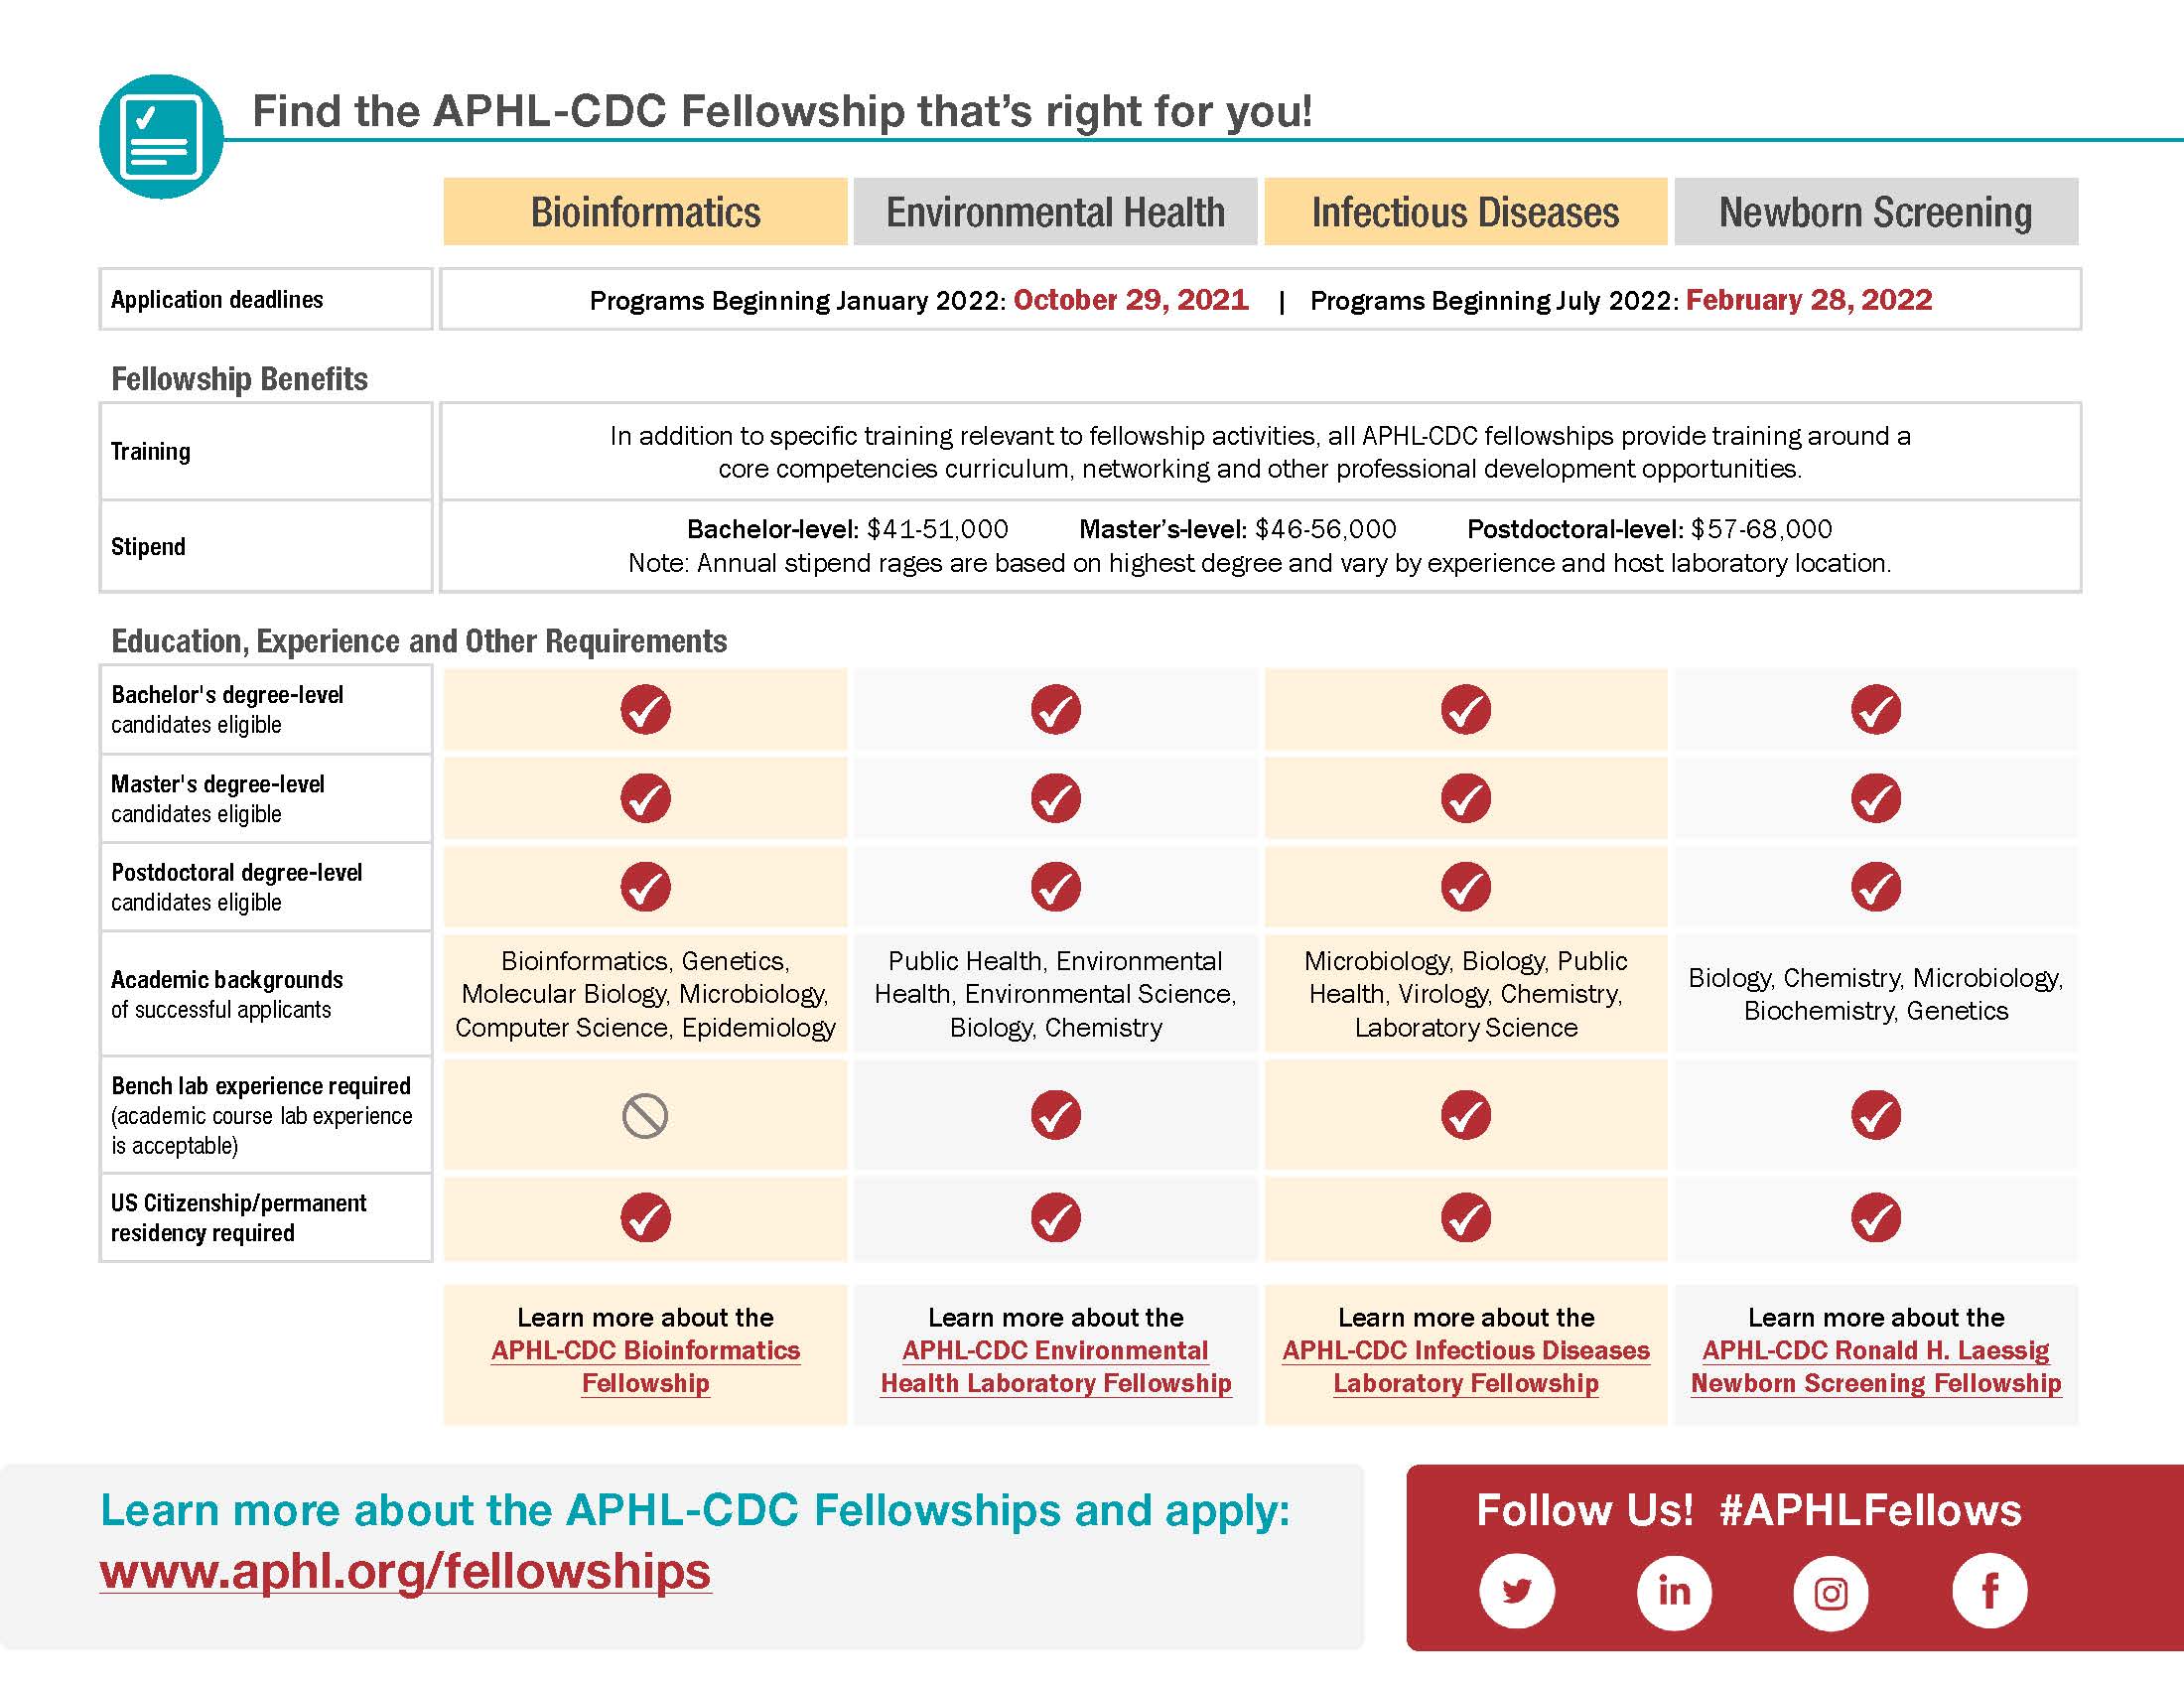 APHL-CDC Public Health Laboratory Fellowships